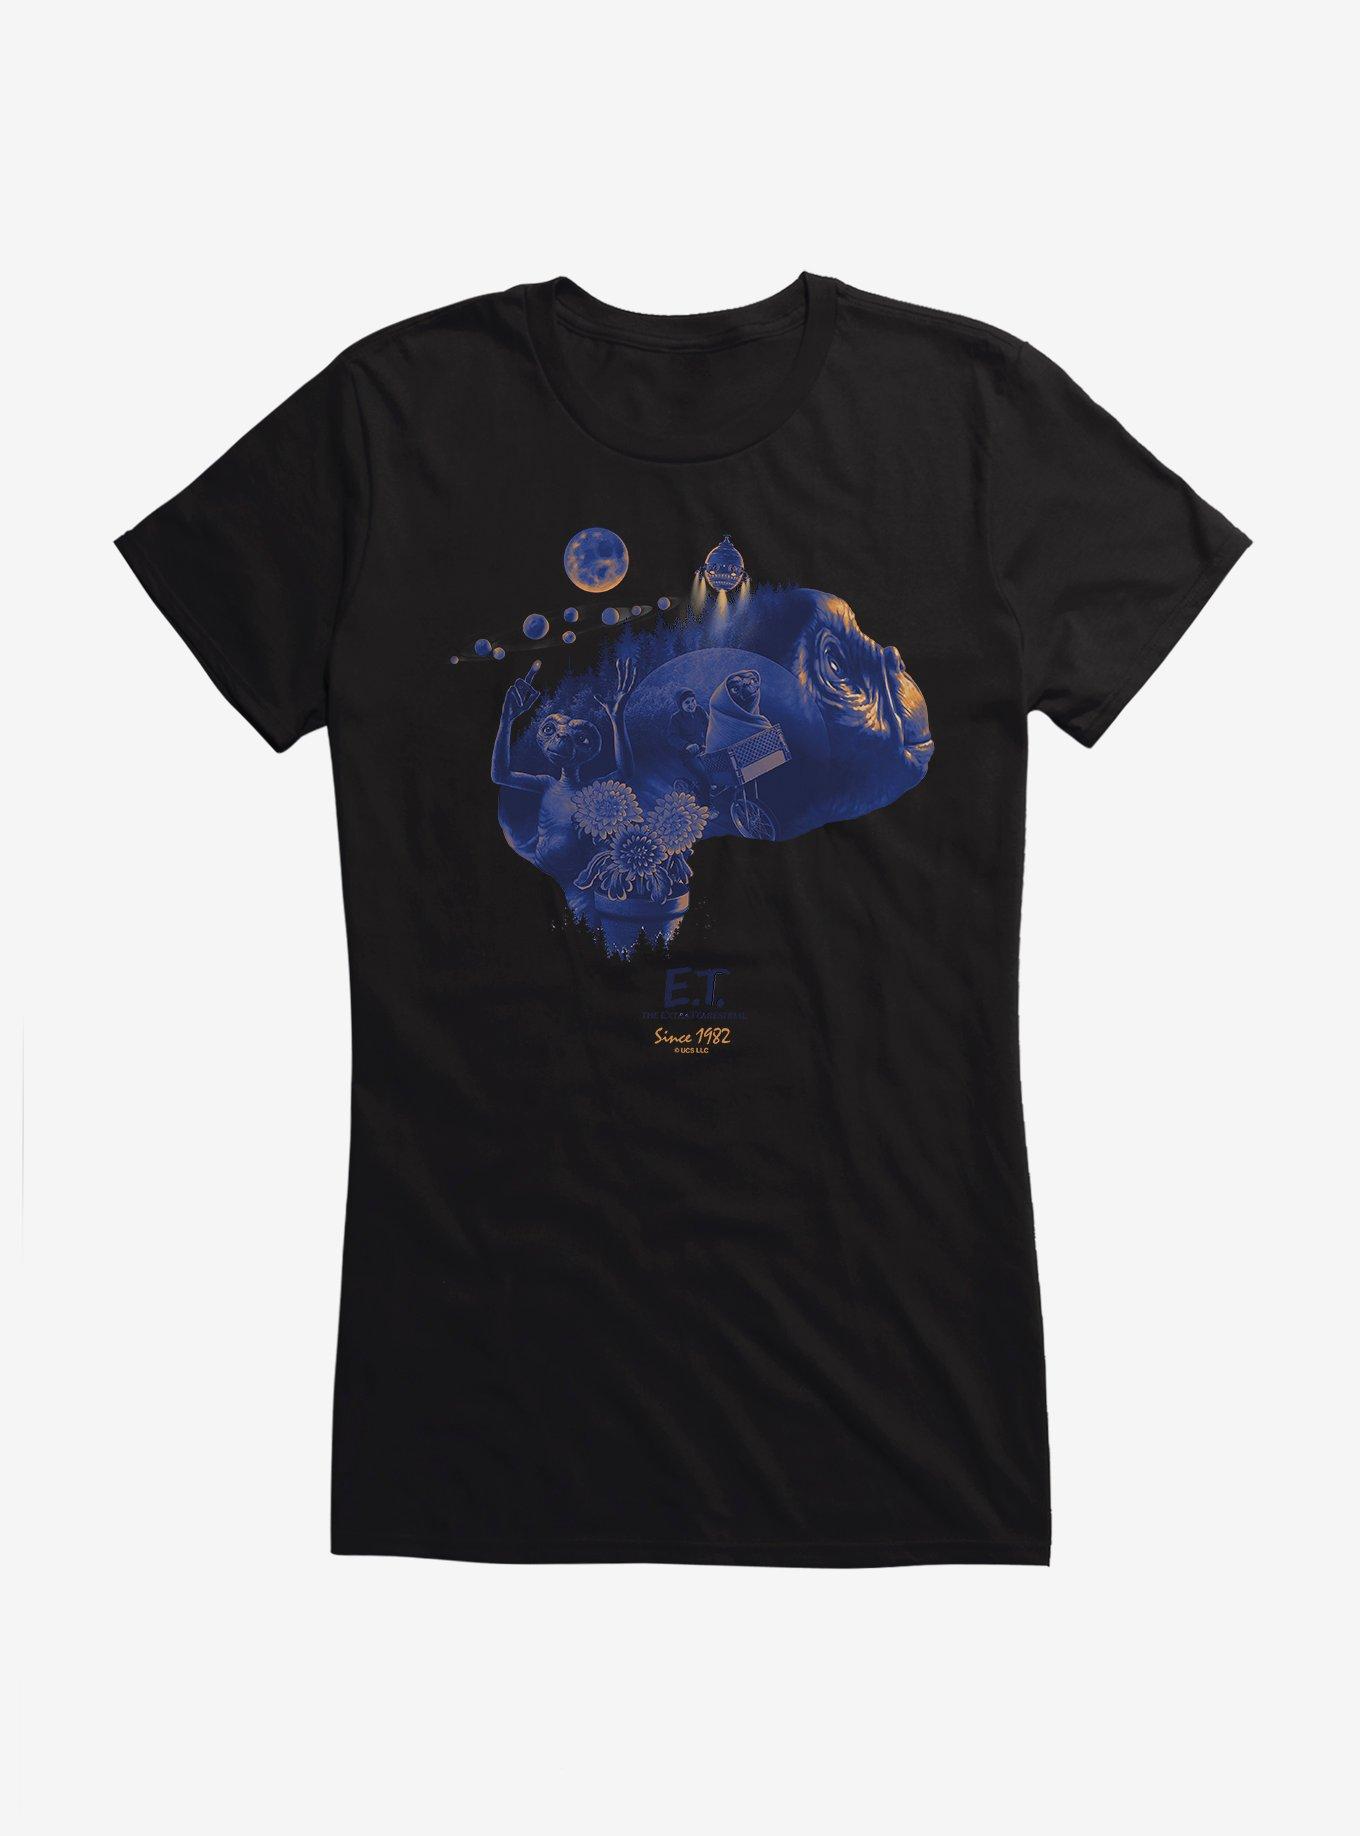 E.T. 40th Anniversary Collage Art Graphic Girls T-Shirt, BLACK, hi-res